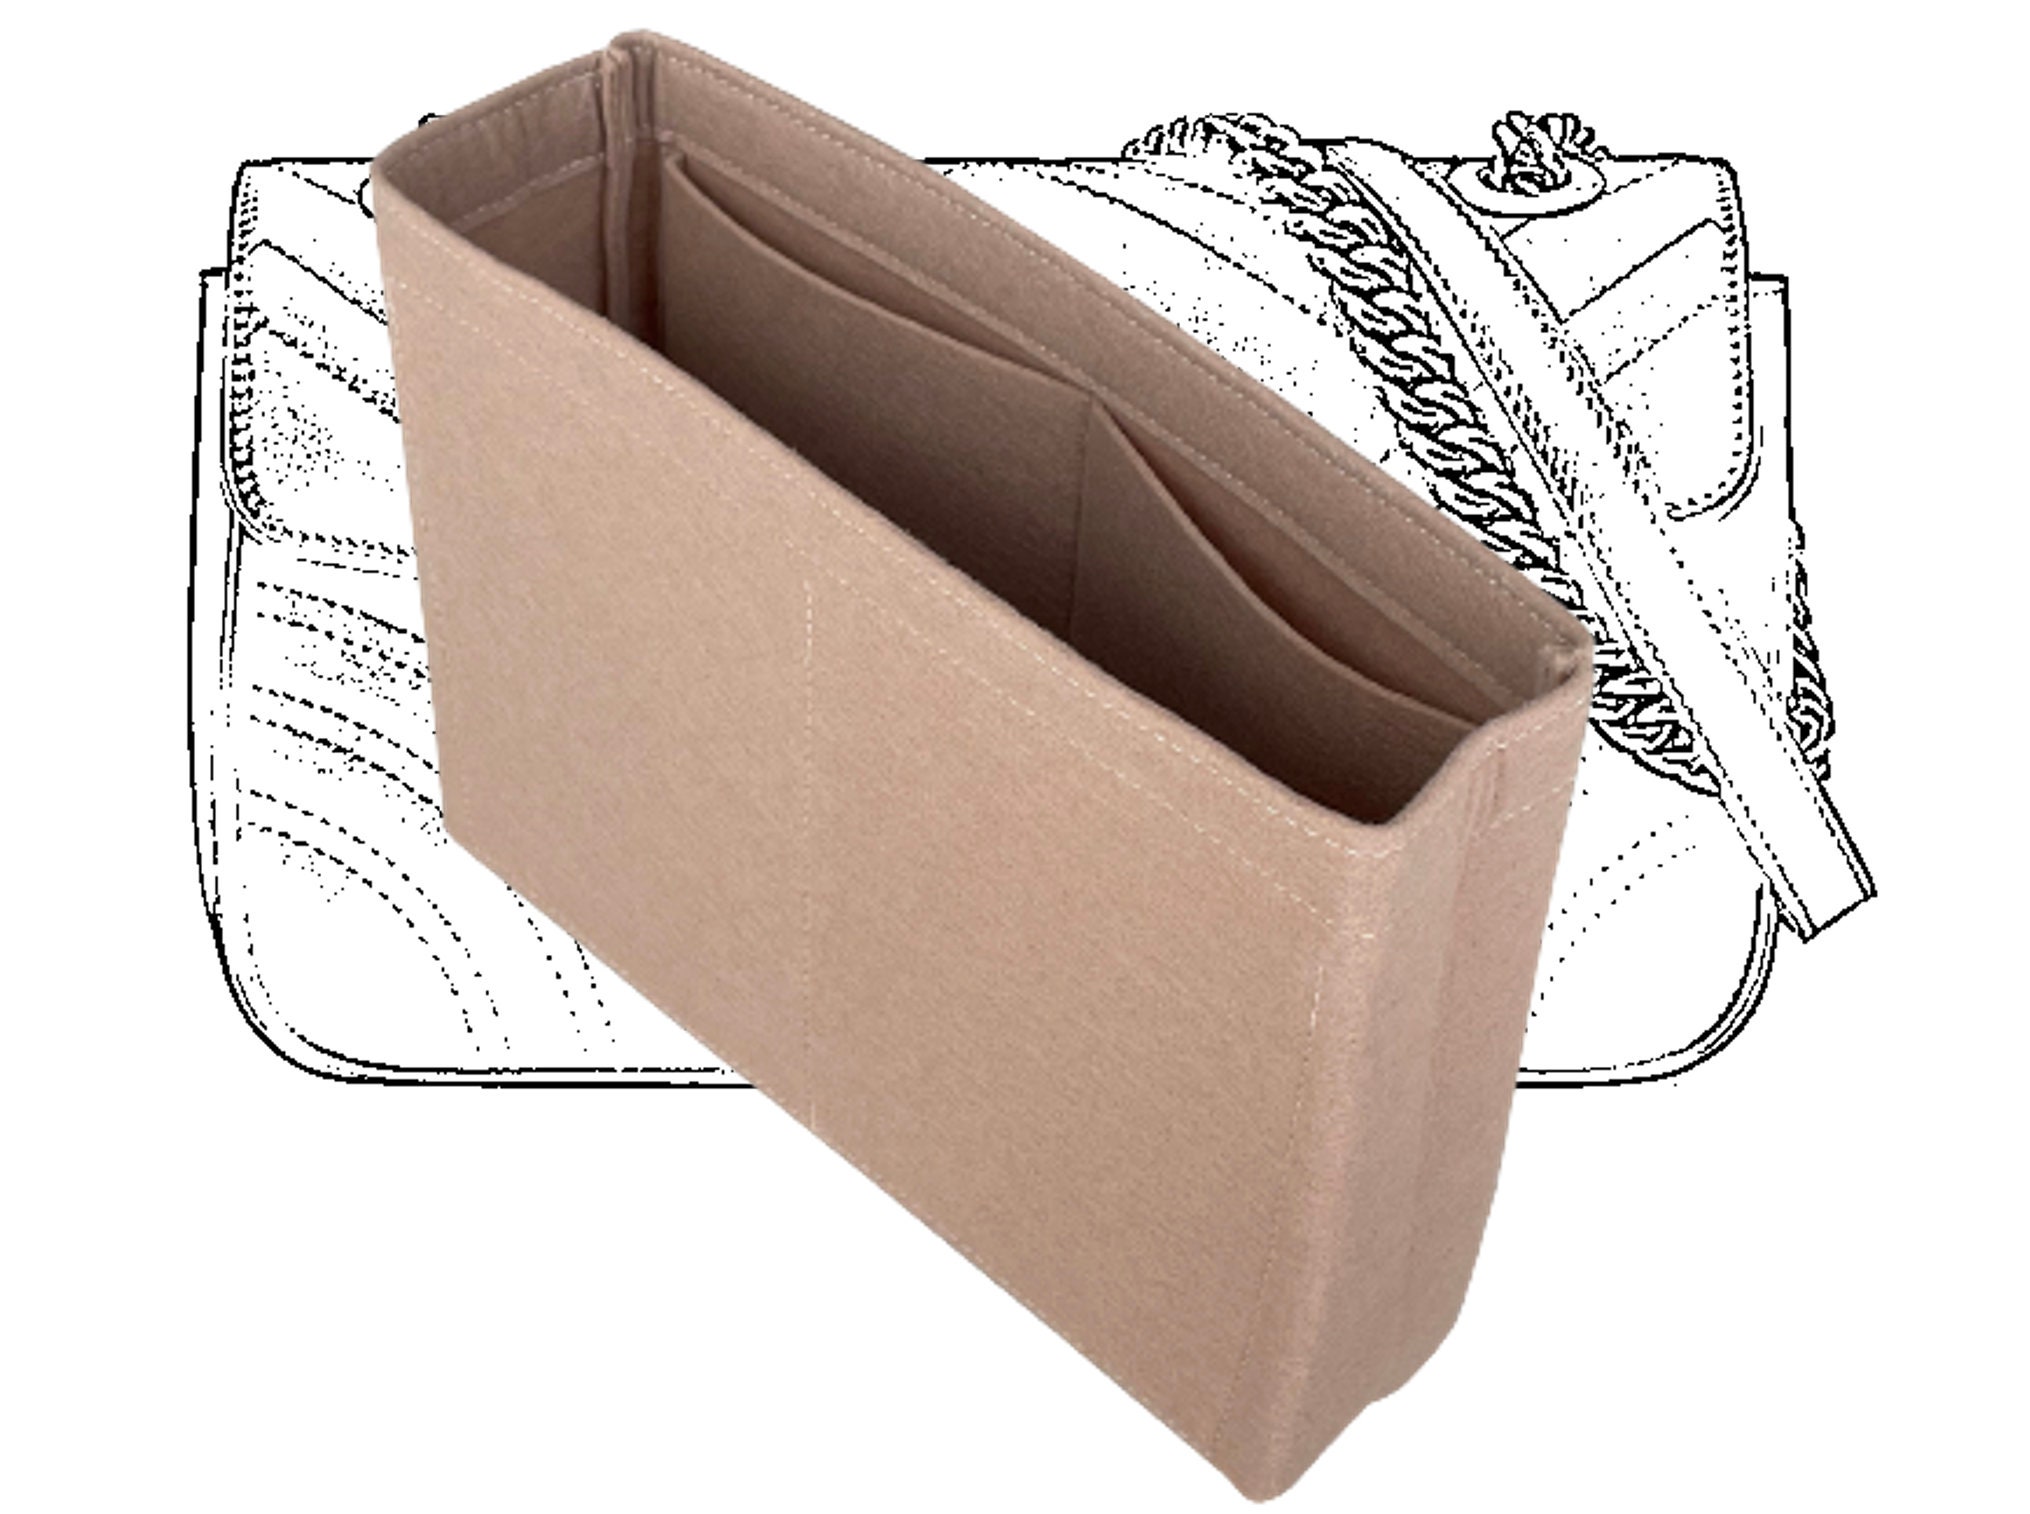 LEXSION Felt Insert Purse Organizer with Zipper,Small Handbag Tote Shaper Insert for GG Marmont Matelasse Shoulder Bag(Pack of 2)-Small 8030 Beige